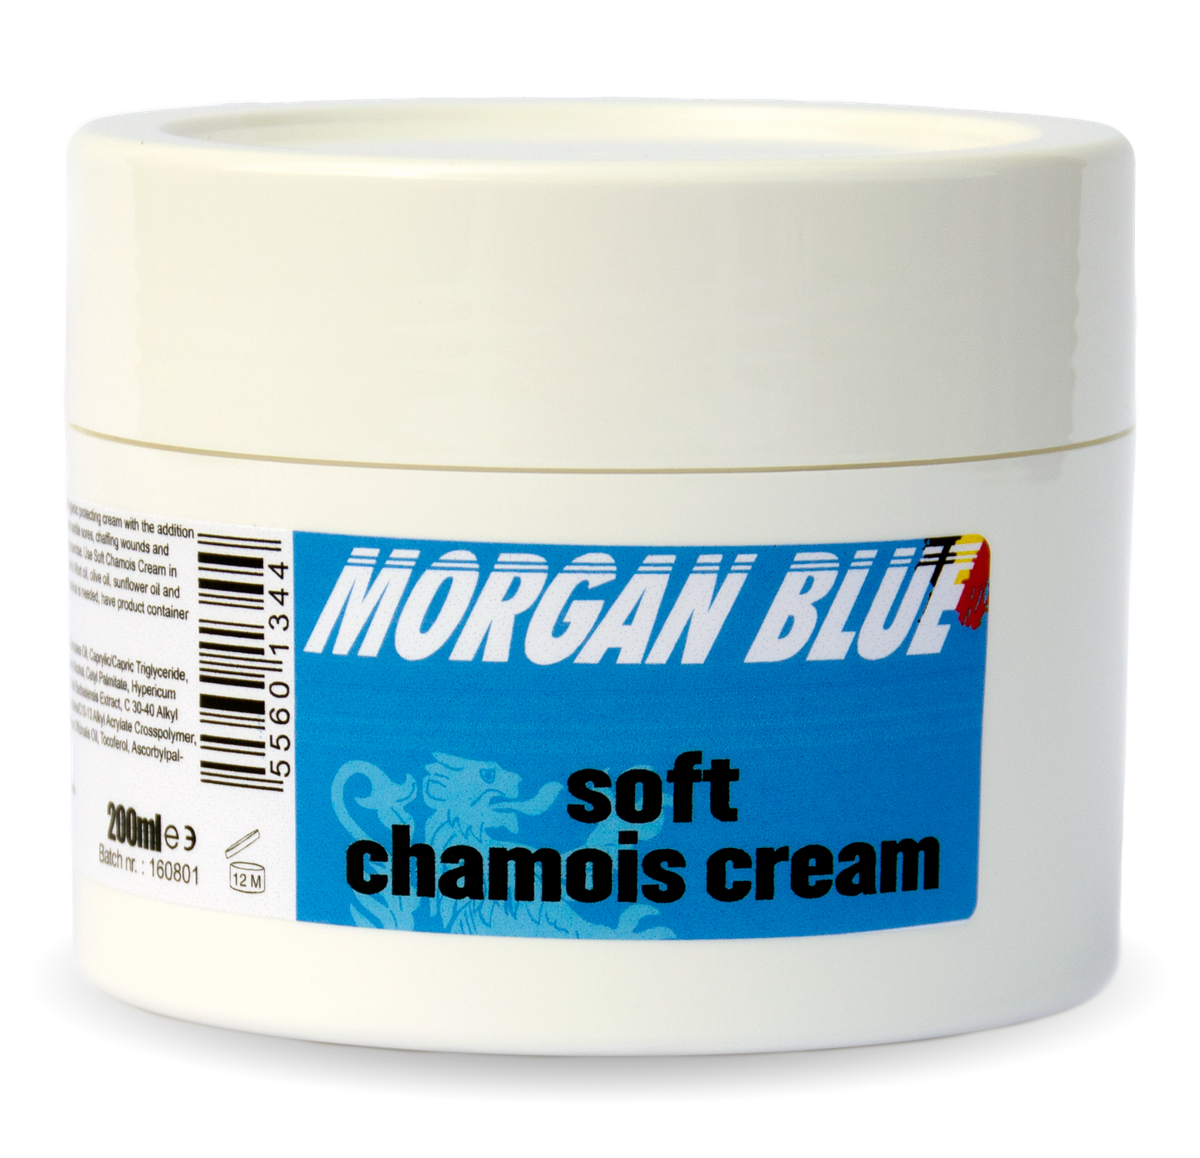 Morgan Blue Chamois Cream Soft 200cc Pottle - Mangata Sport - Morgan Blue Swim Bike Run Triathlon